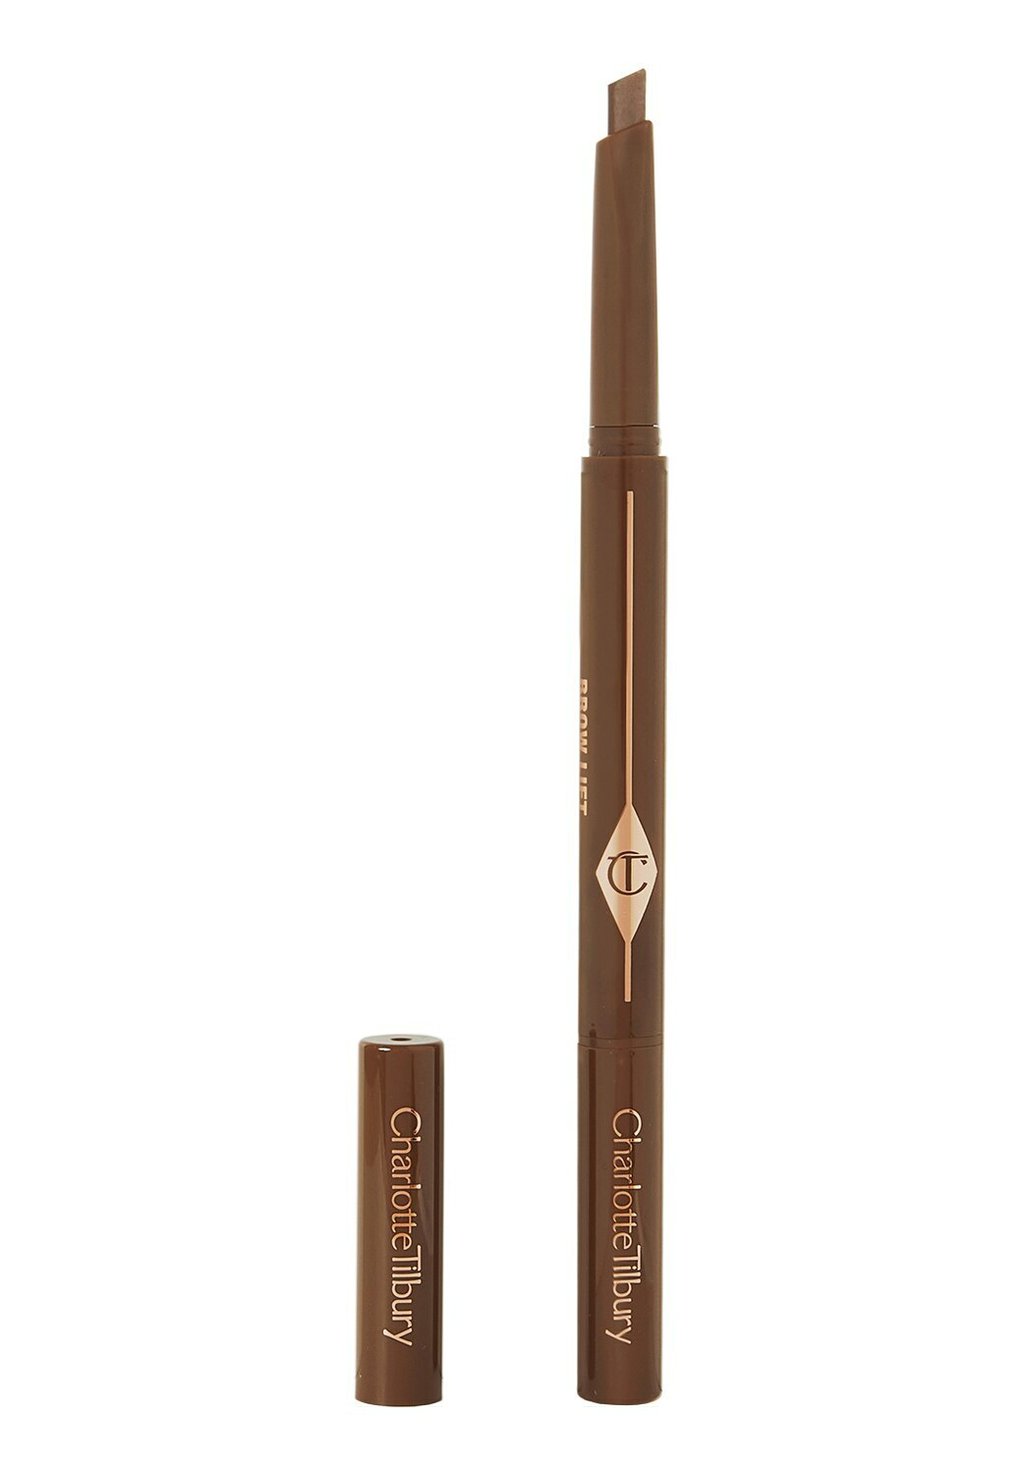 Карандаш для бровей BROW LIFT Charlotte Tilbury, цвет natural brown карандаш для бровей charlotte tilbury brow lift оттенок medium brown